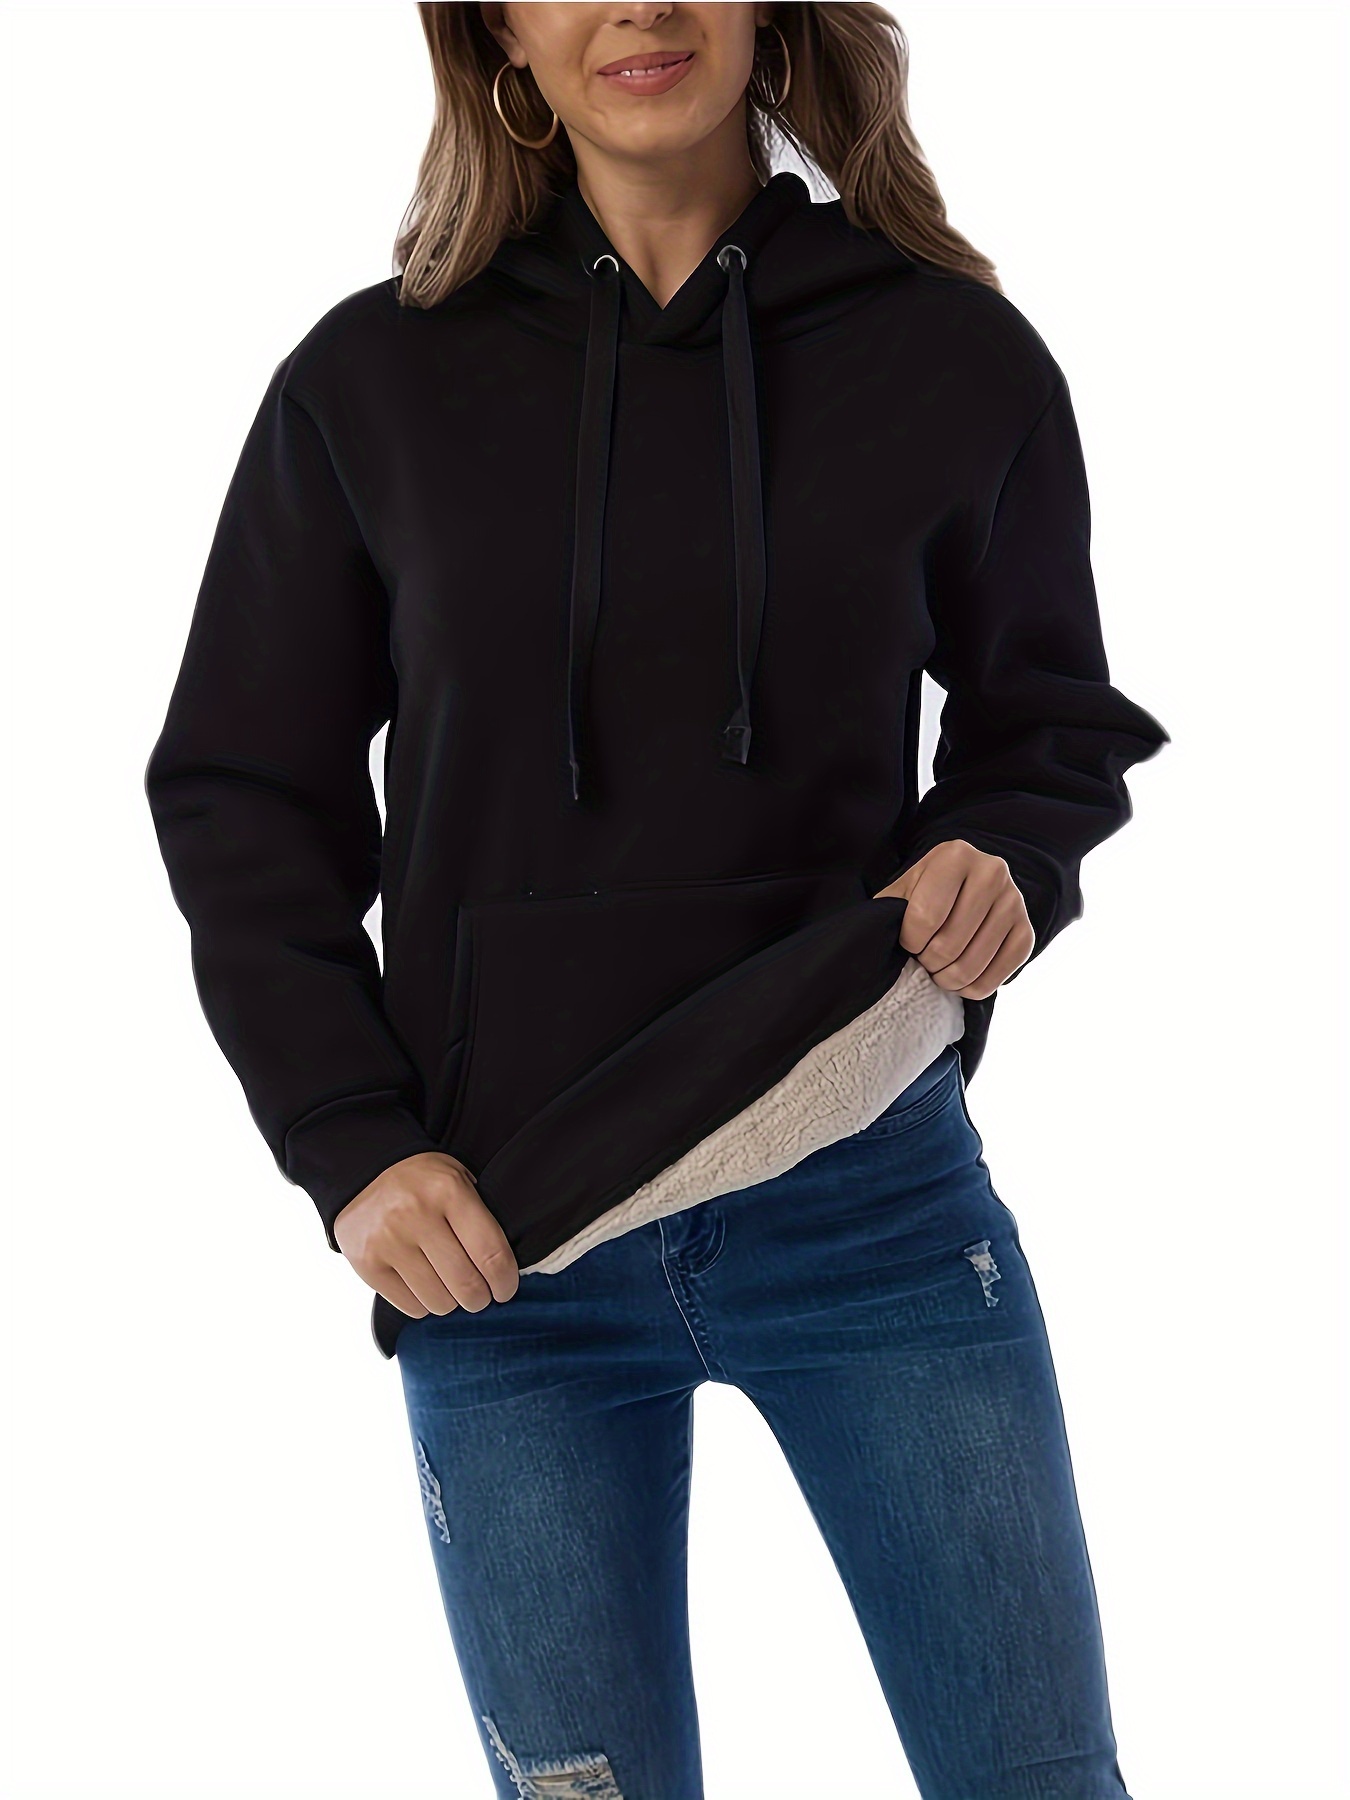 solid fleece drawstring hoodie casual long sleeve warm sweatshirt for fall winter womens clothing details 4